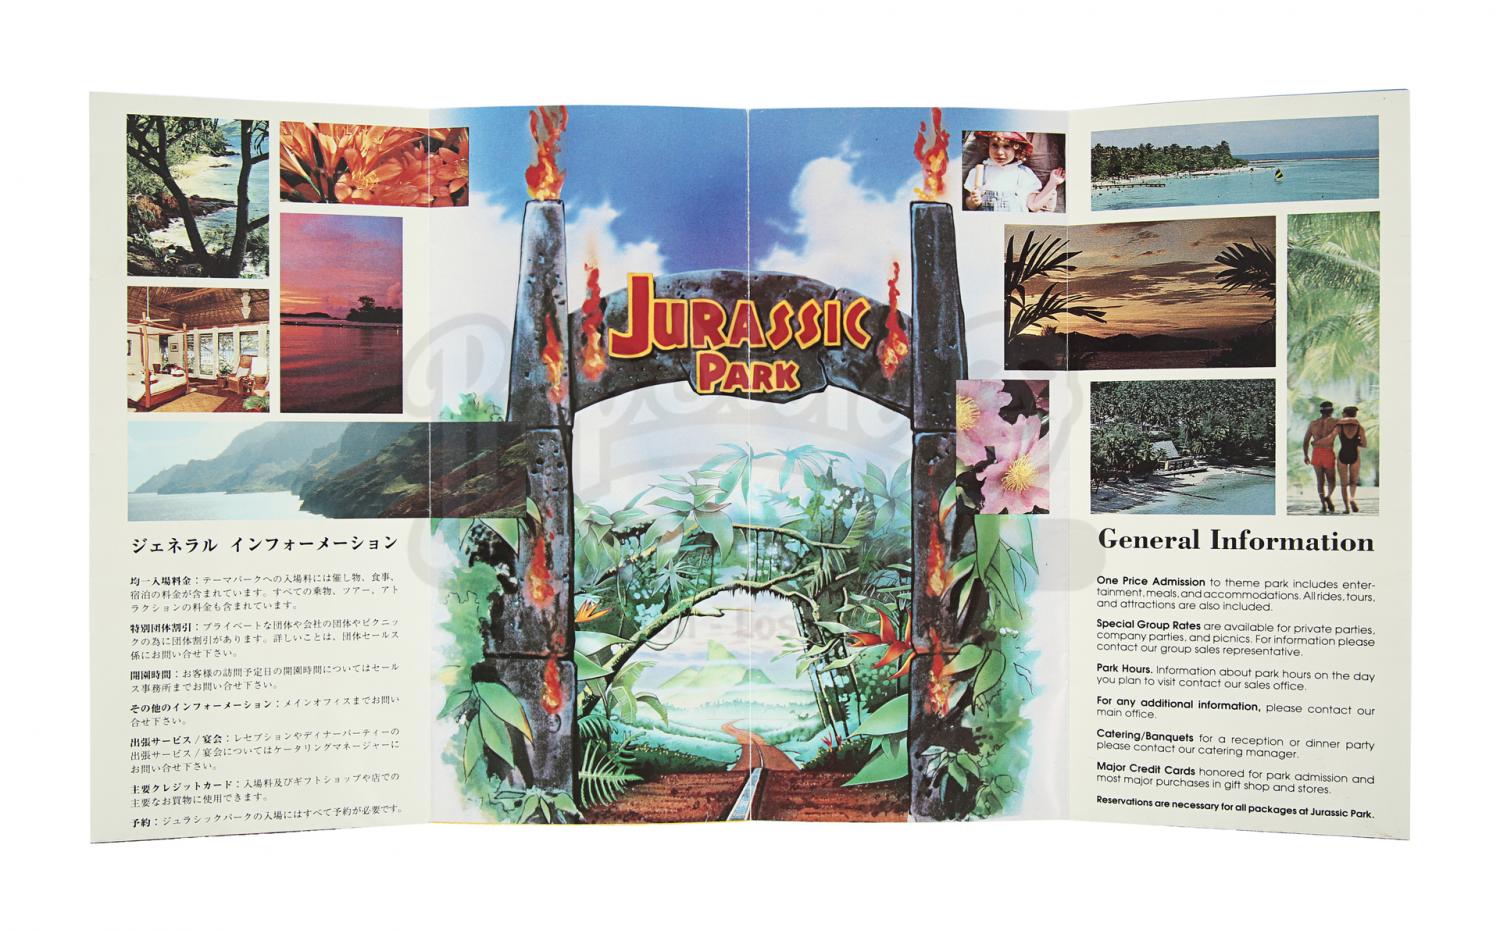 Lot 434 Jurassic Park 1993 Park Visitor Brochure Price Estimate 00 3000